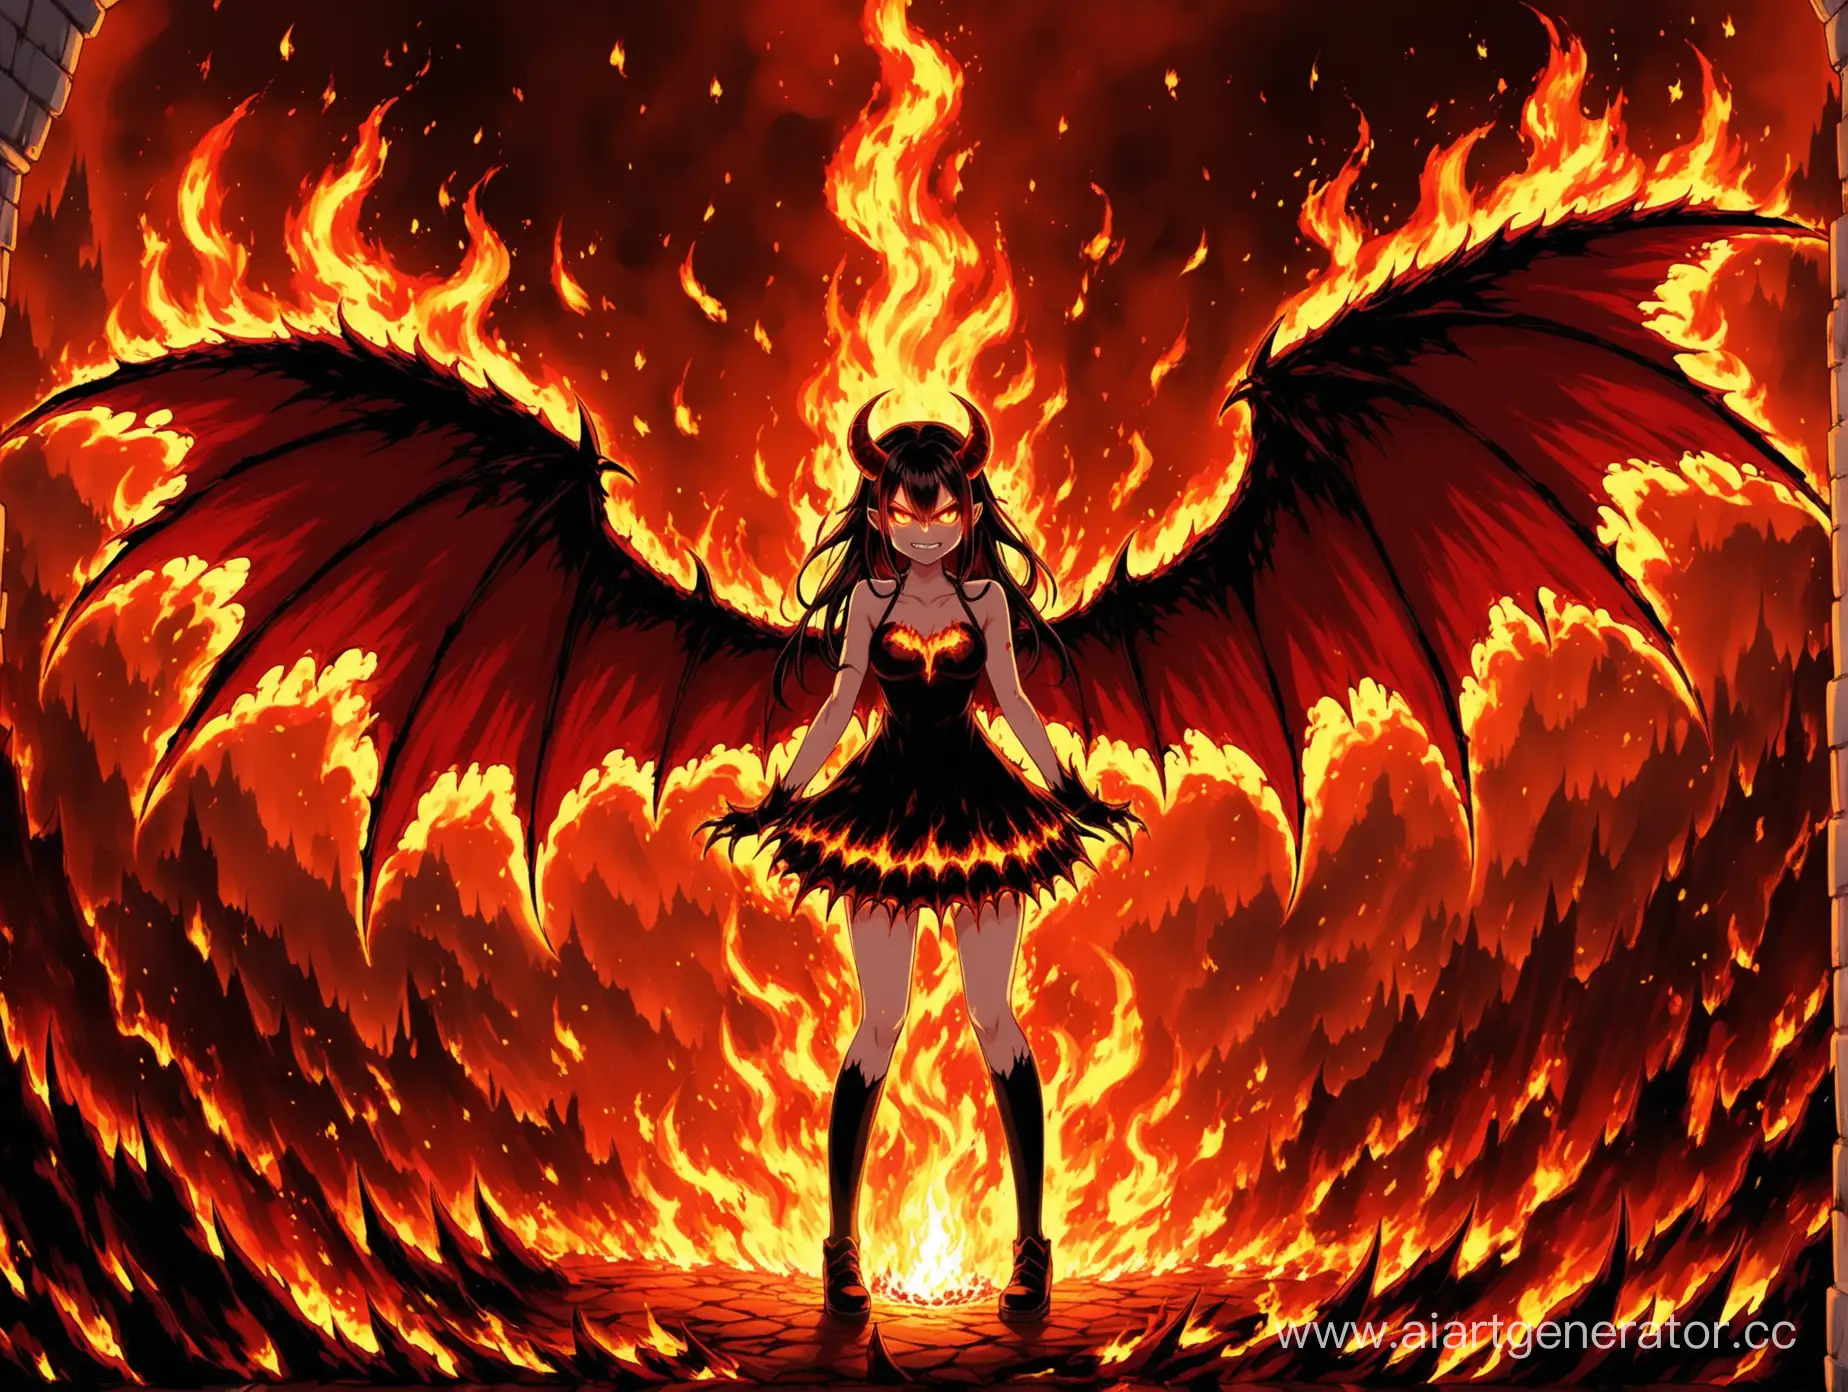 Hellish-Anime-Scene-Satan-Girl-with-Fiery-Wings-in-the-Infernal-Abyss